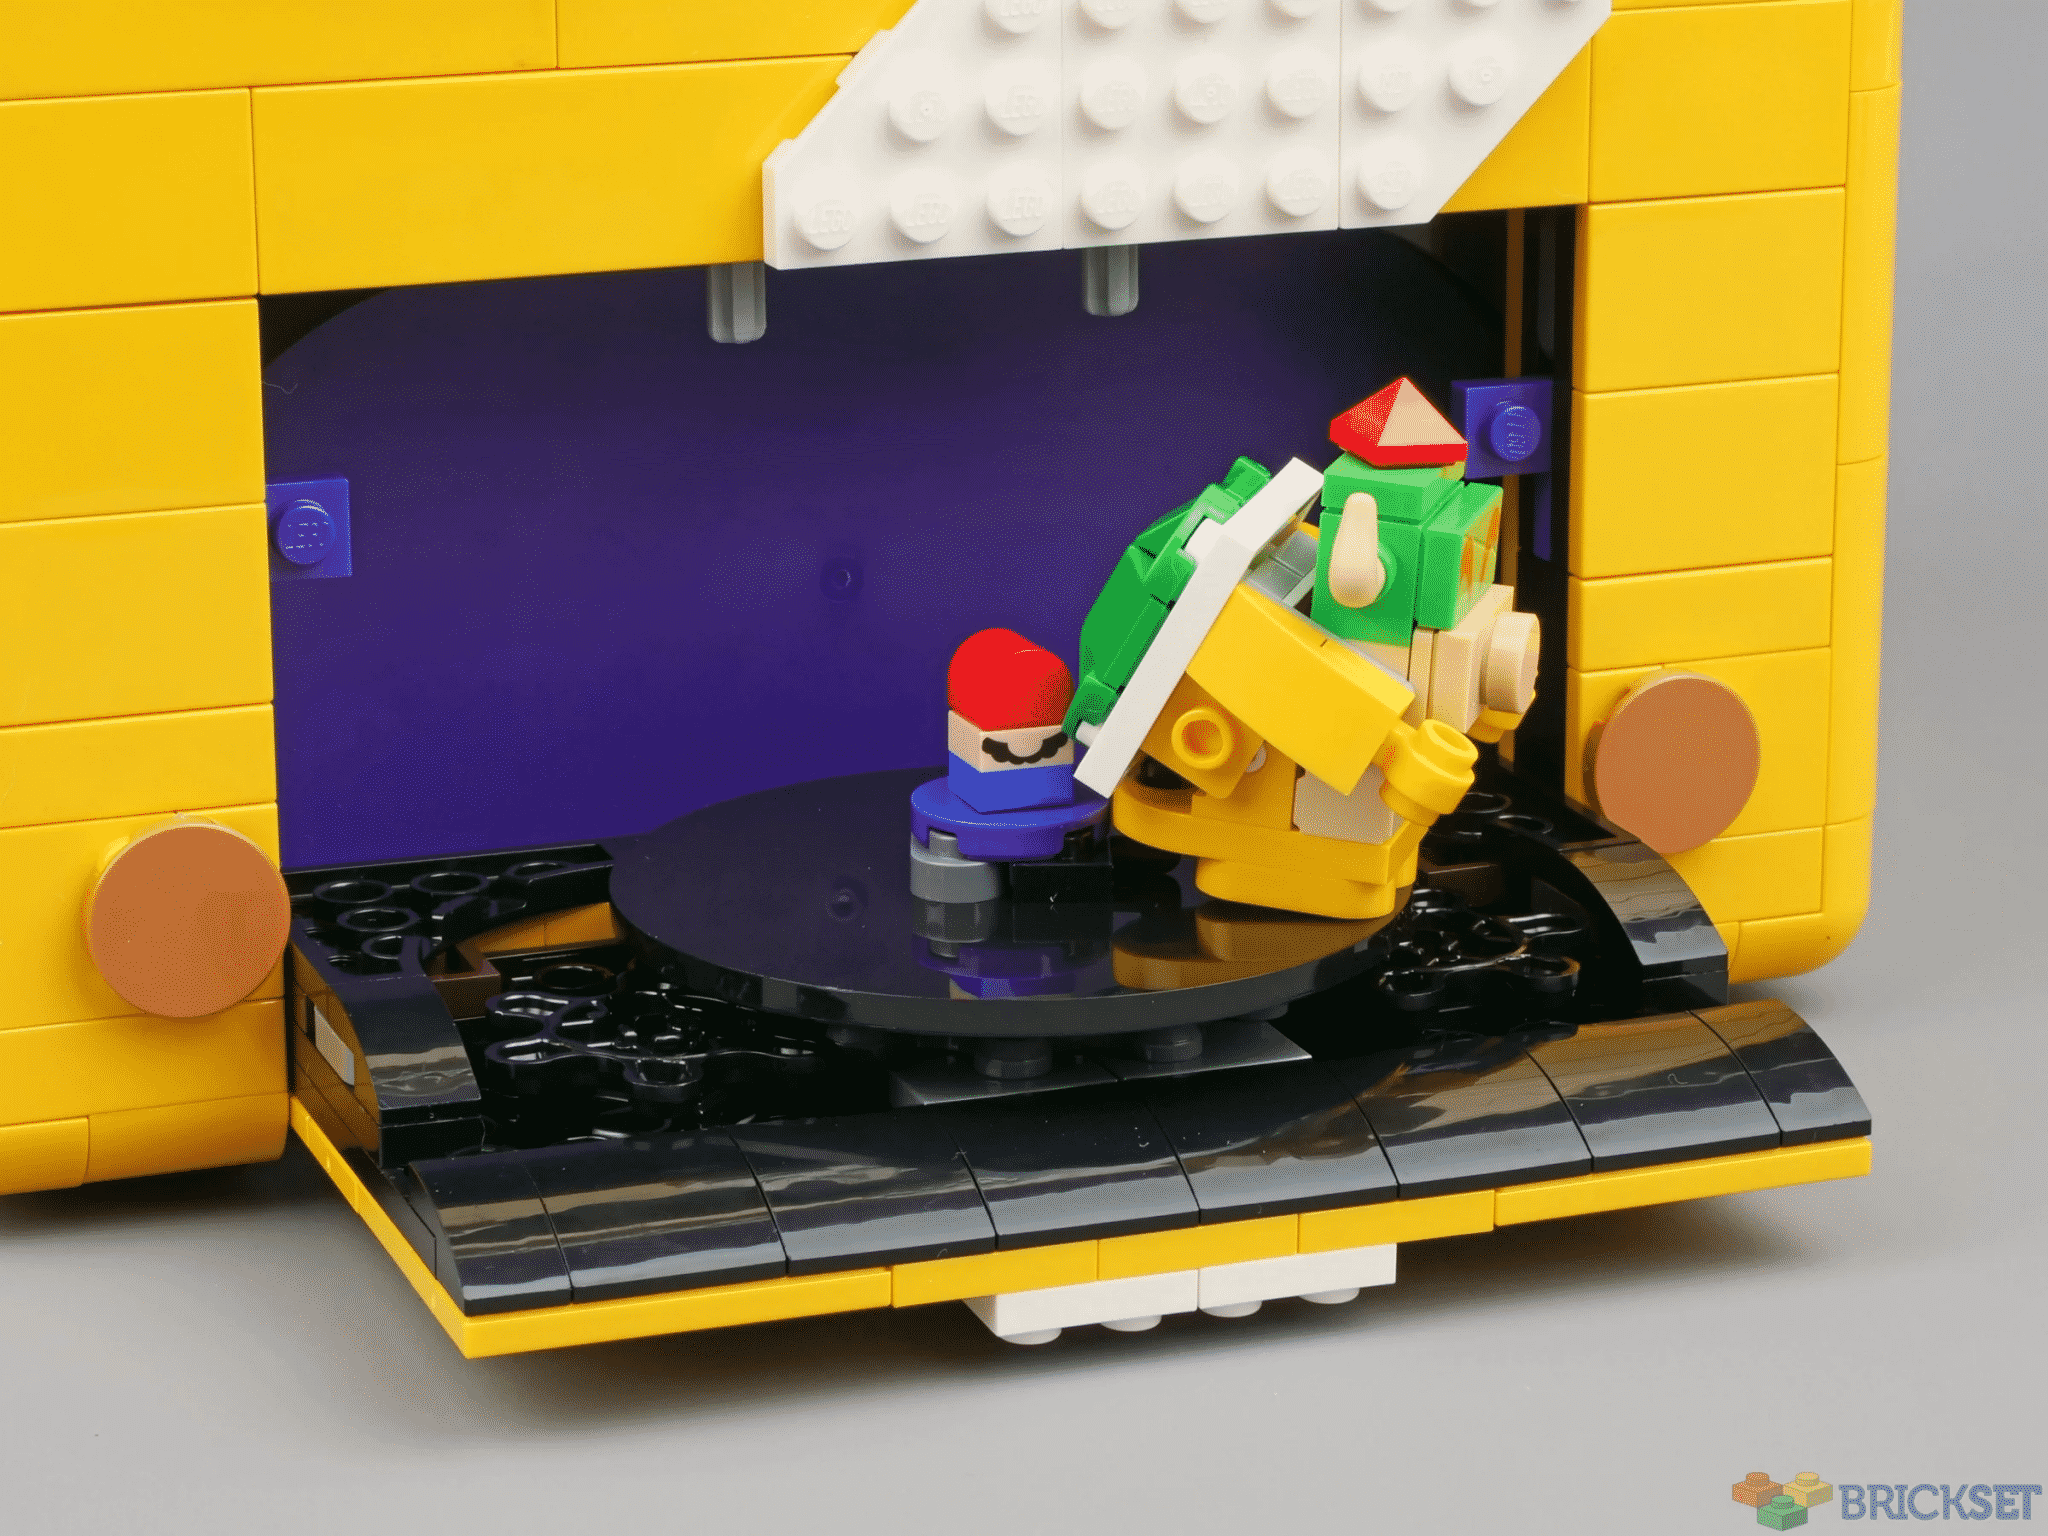 LEGO Mario